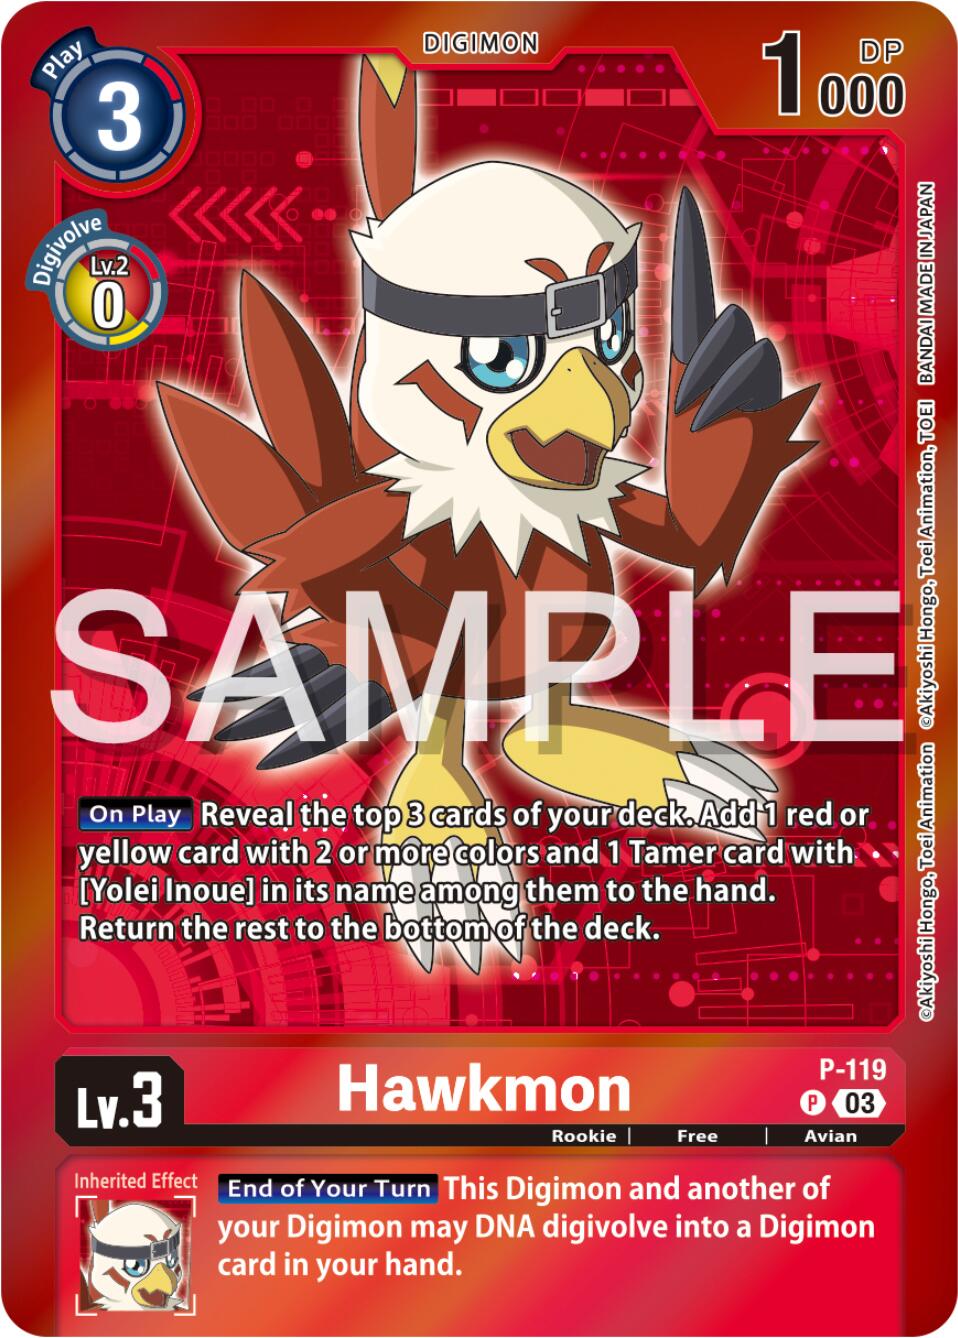 Hawkmon [P-119] - P-119 (Digimon Adventure Box 2024) [Promotional Cards] | Shuffle n Cut Hobbies & Games